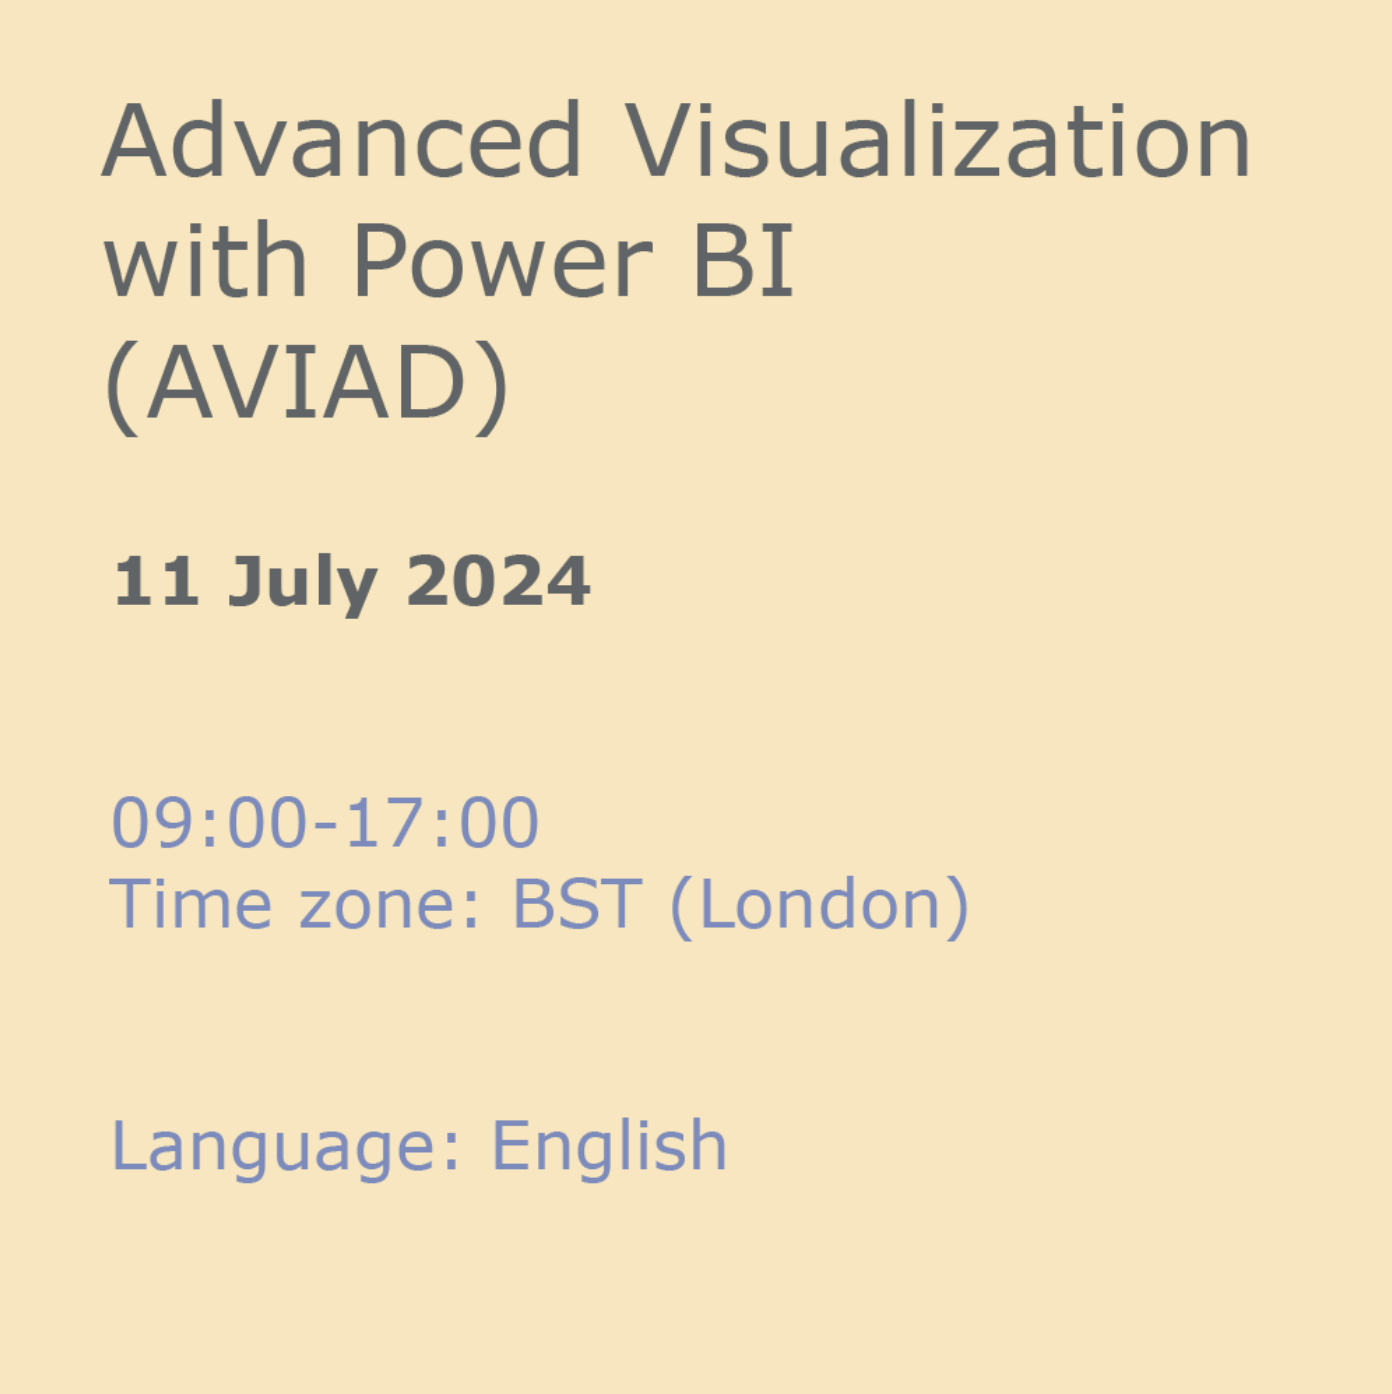 Advanced Visualization with Power BI (AVIAD)